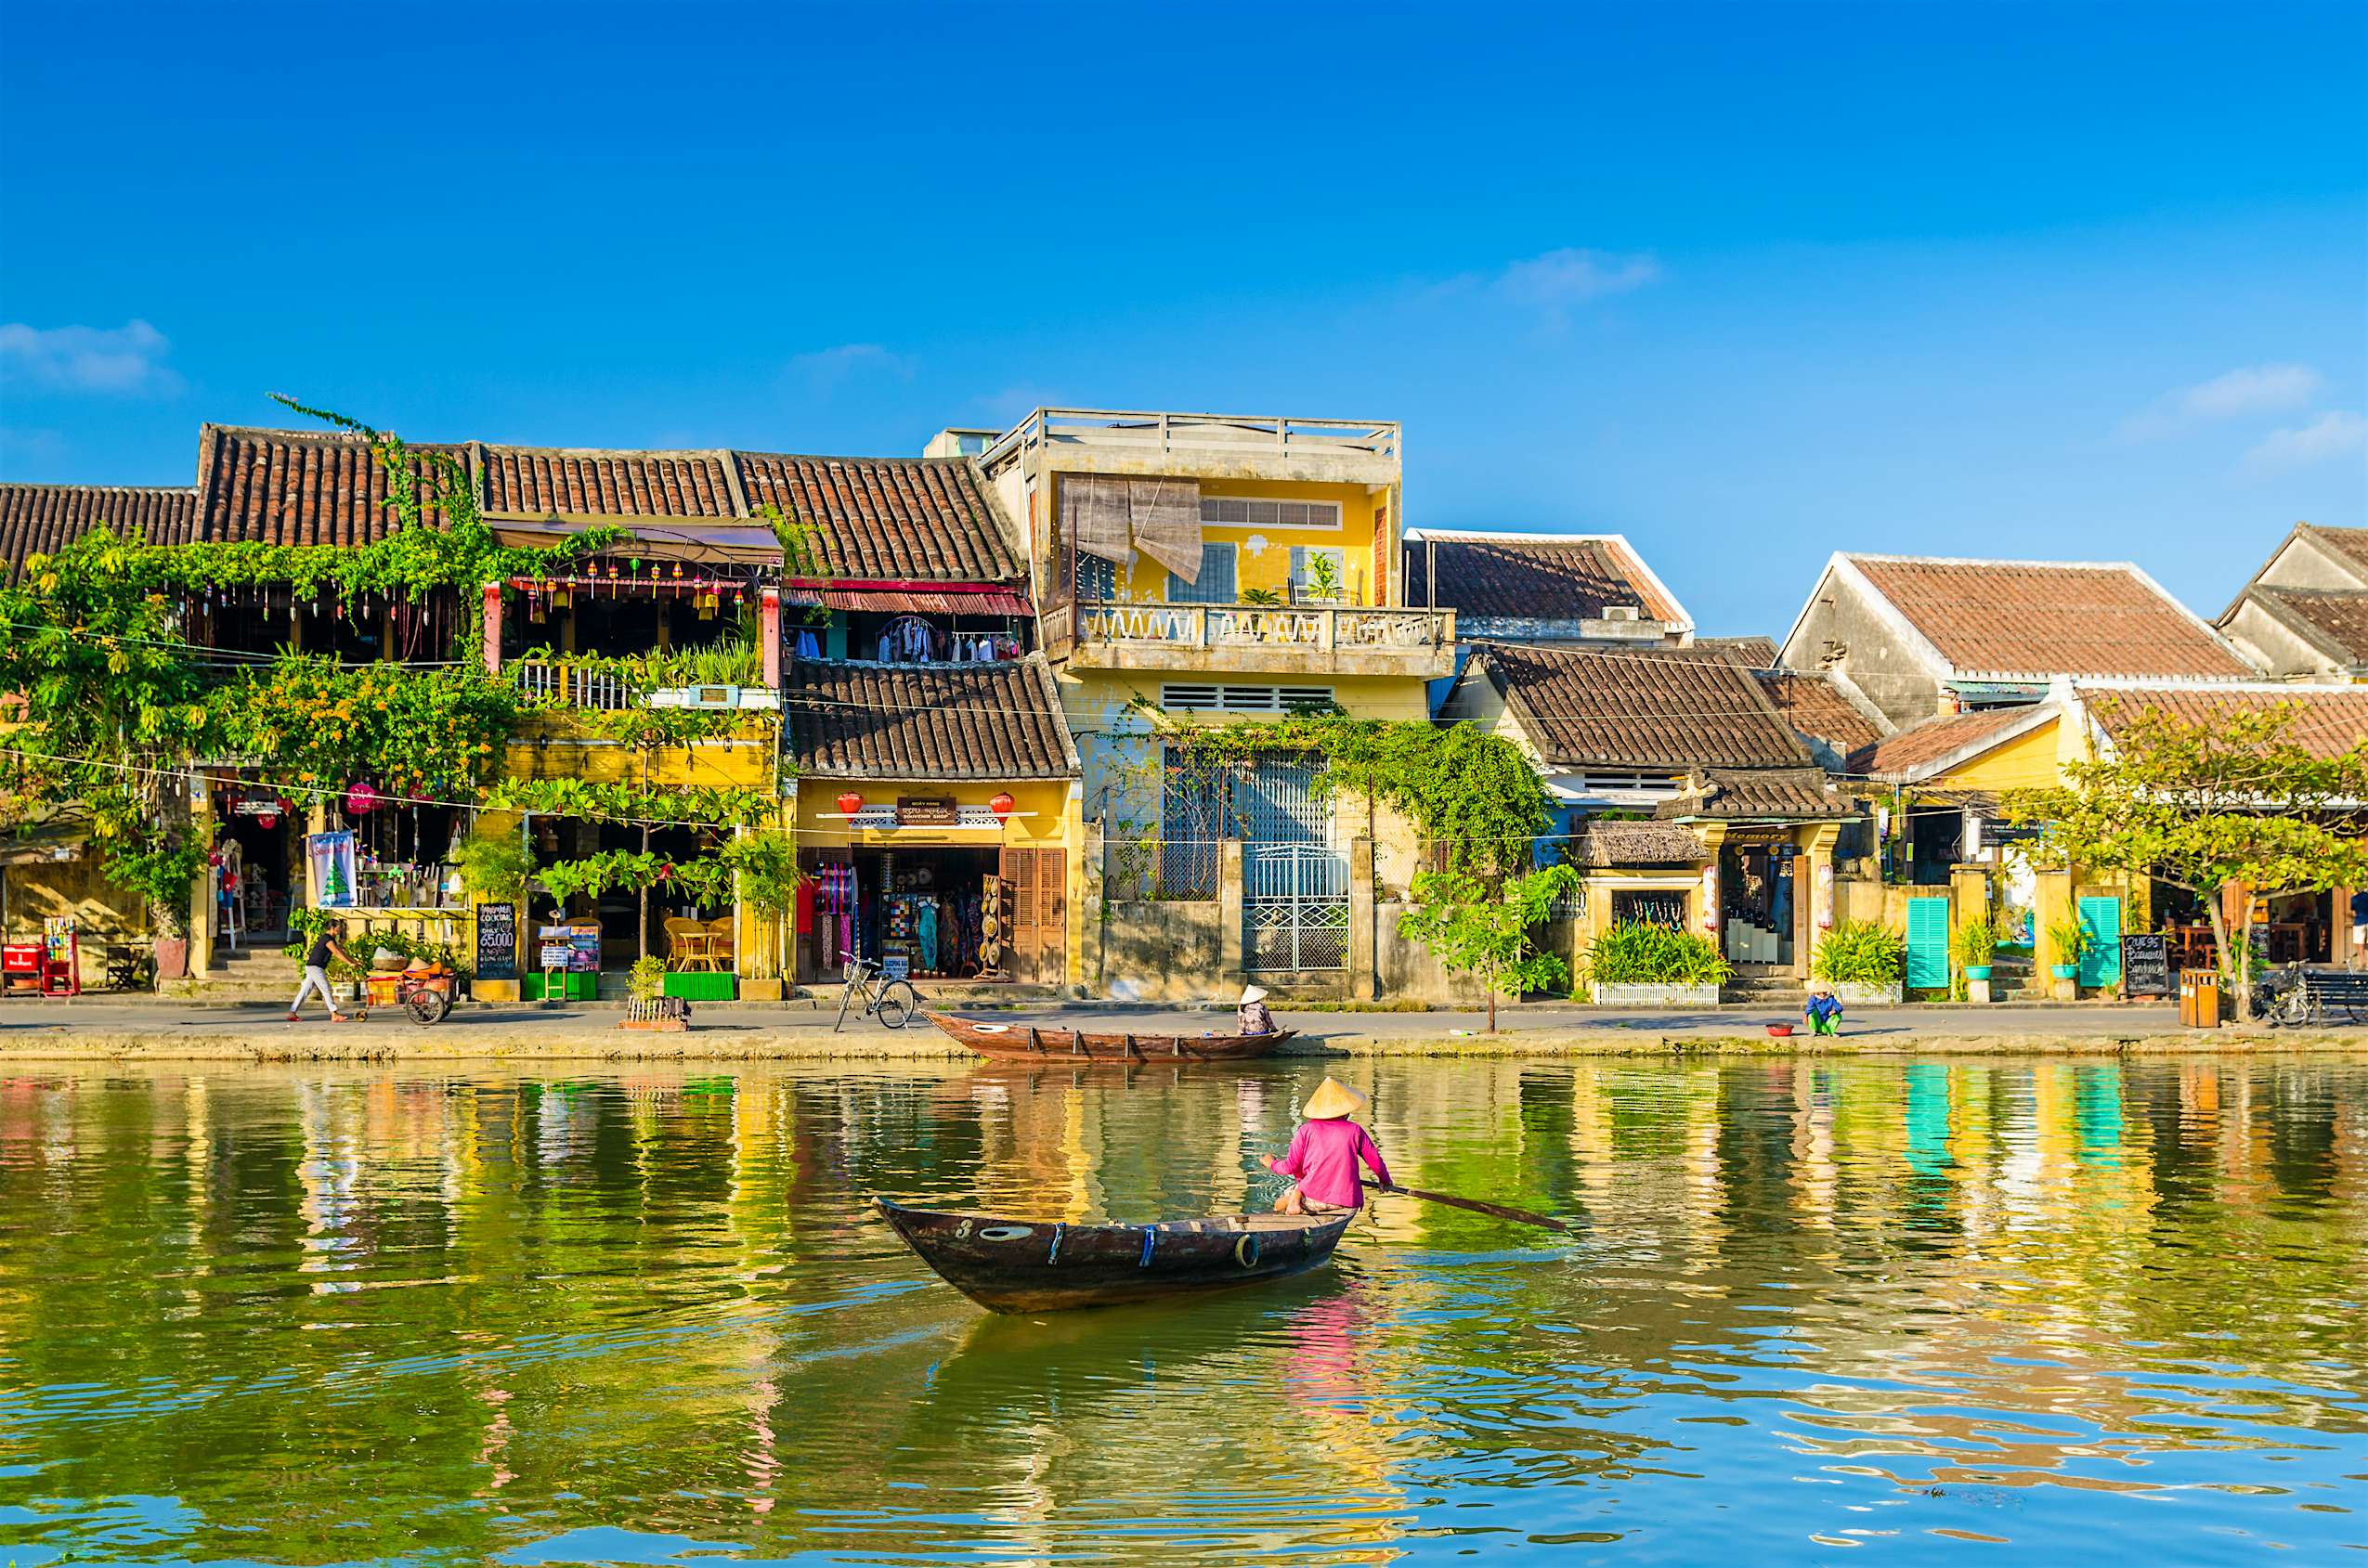 how to travel vietnam